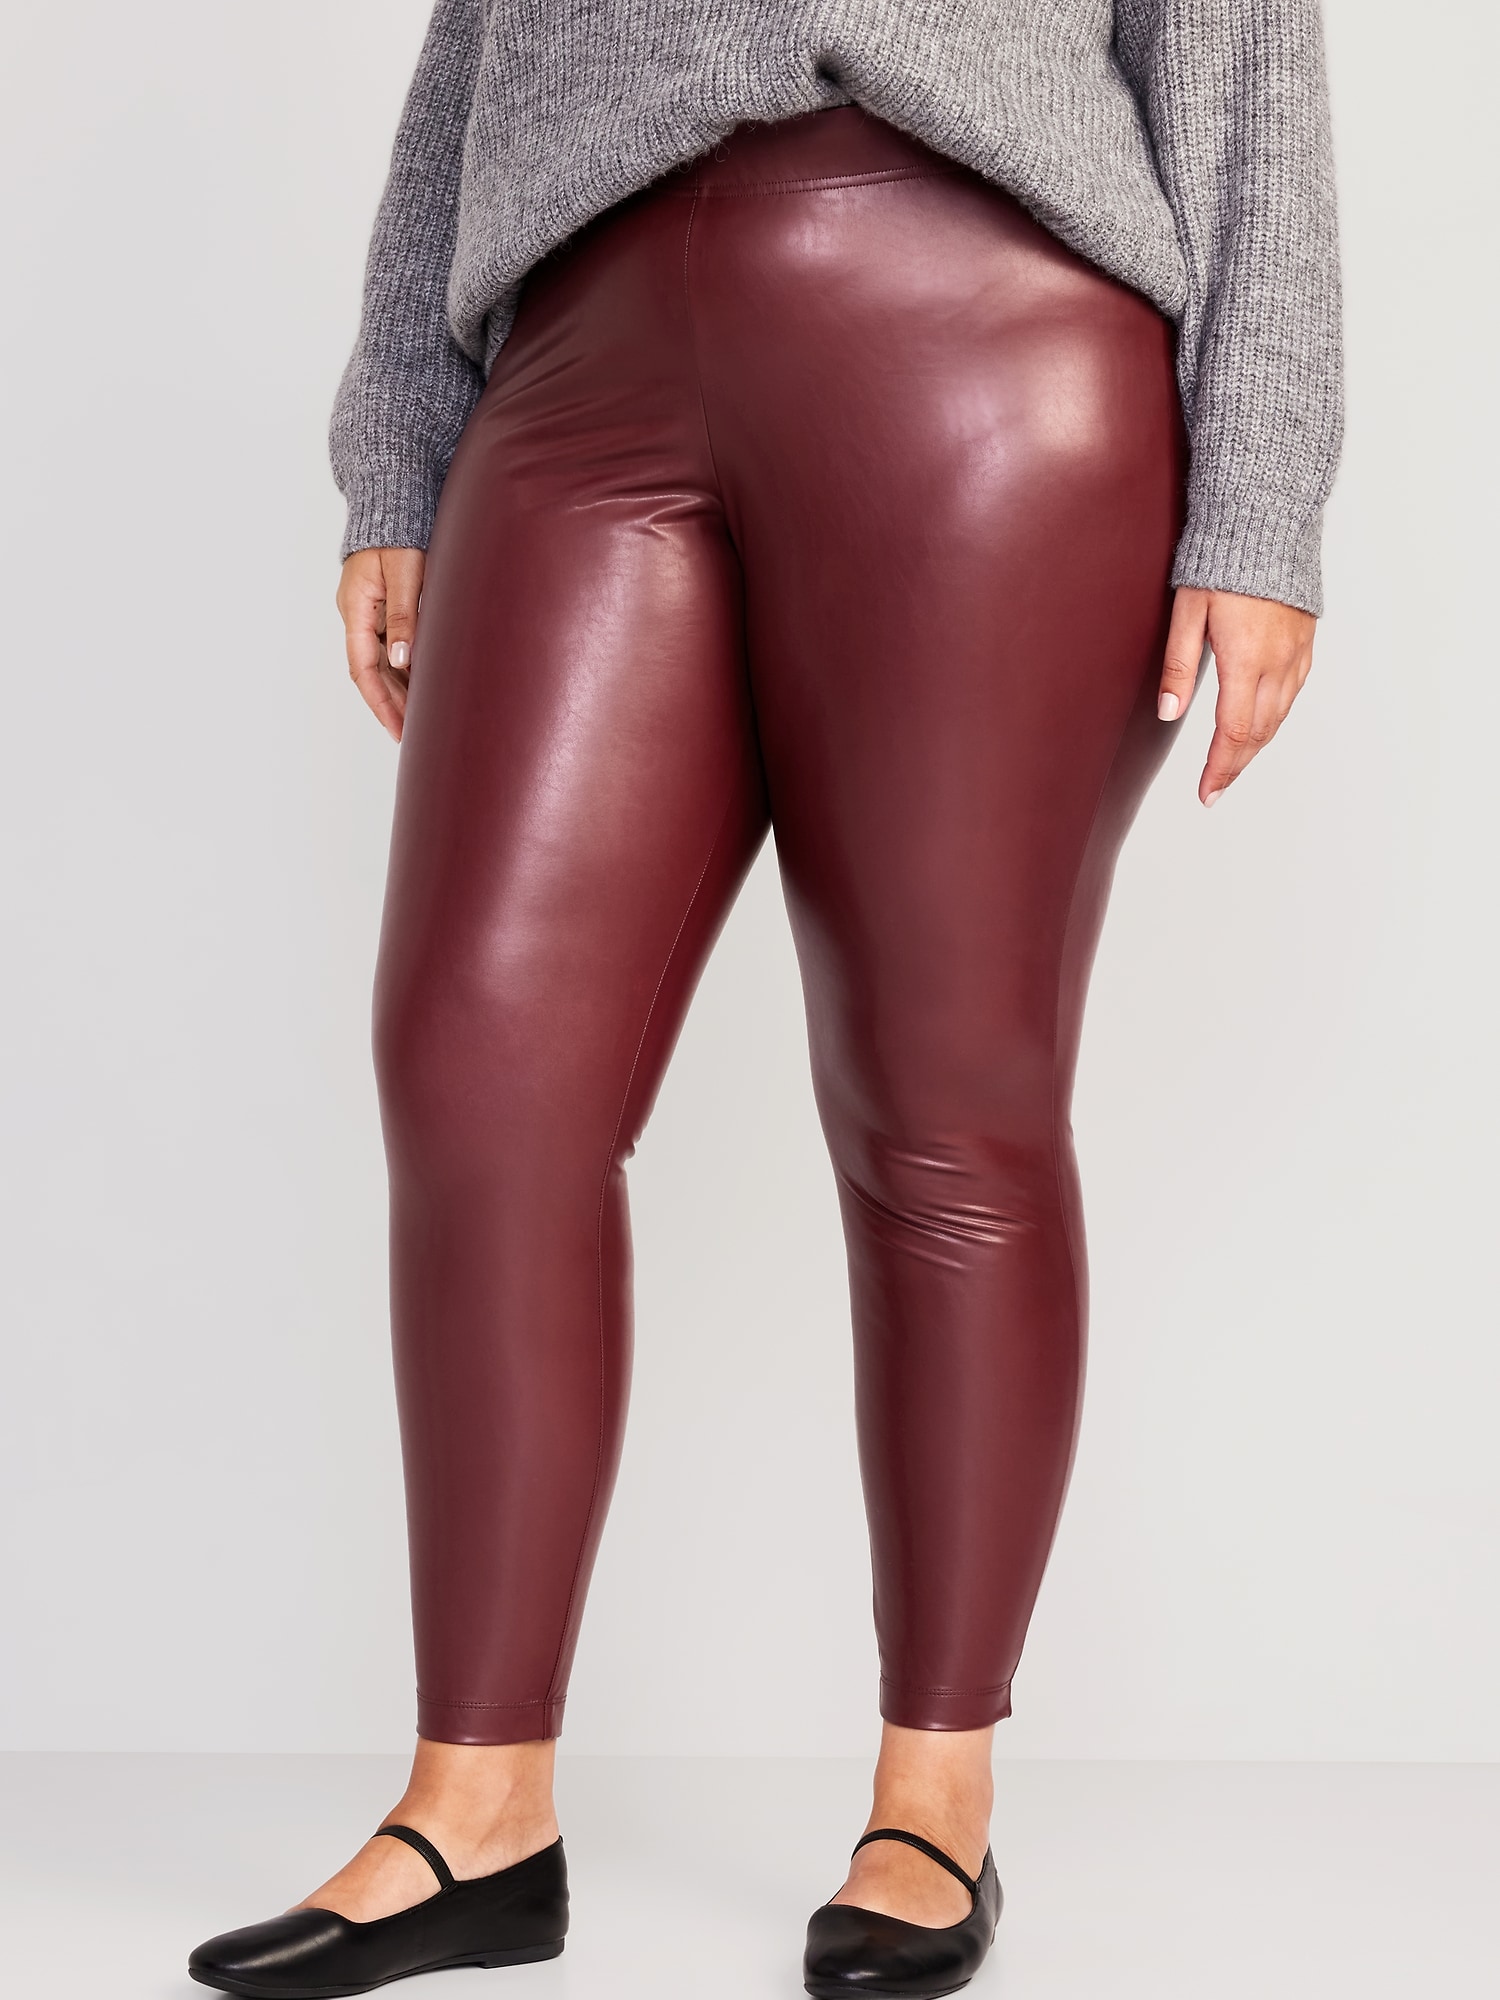 Best Deal for Gondola Blu Faux Leather Leggings for Women High Waist